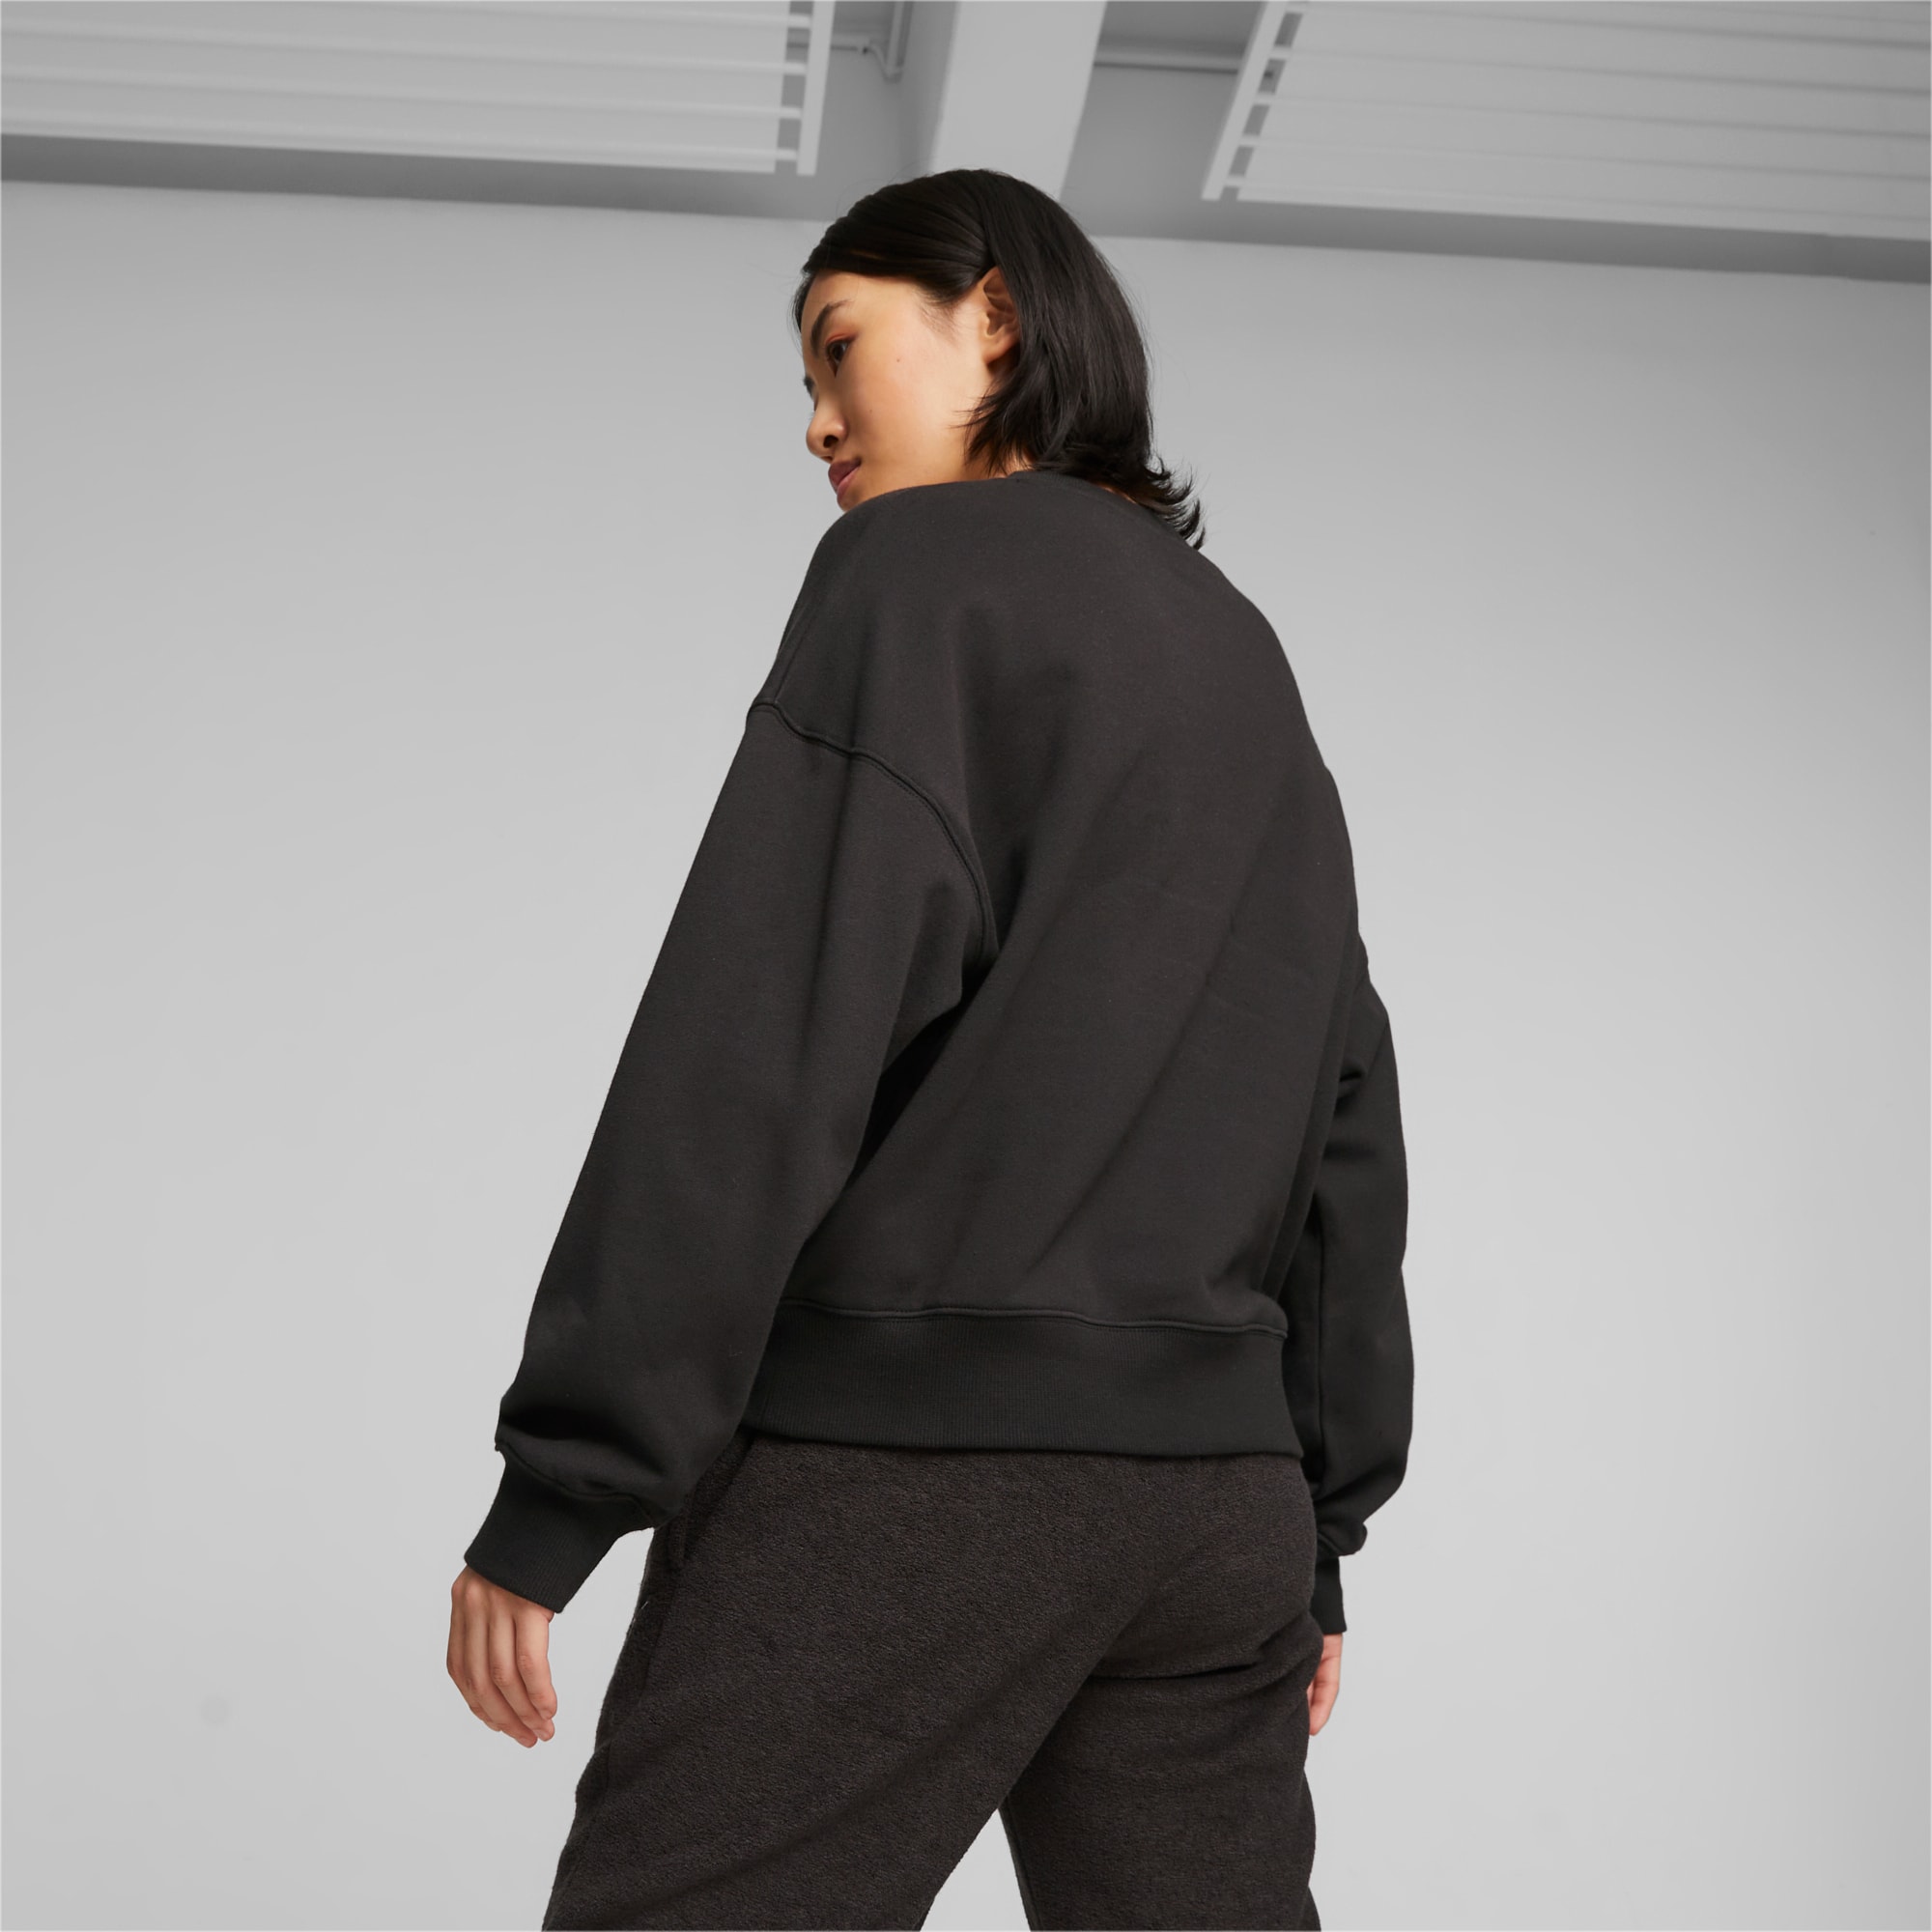 PUMA Classics Women's Oversized Sweatshirt, Black, Size XS, Clothing